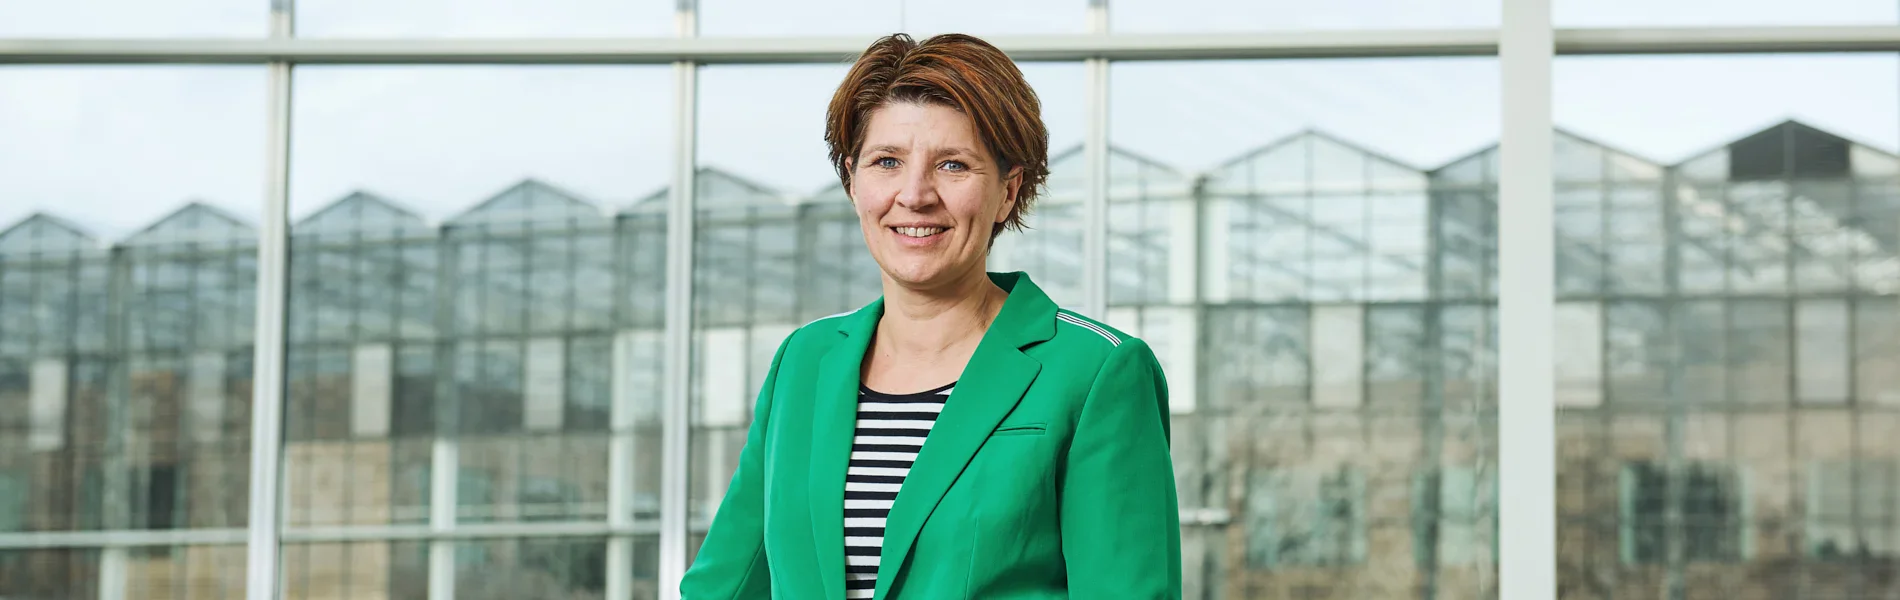 Annet Velthuis professor at Aeres University of Applied Sciences Dronten